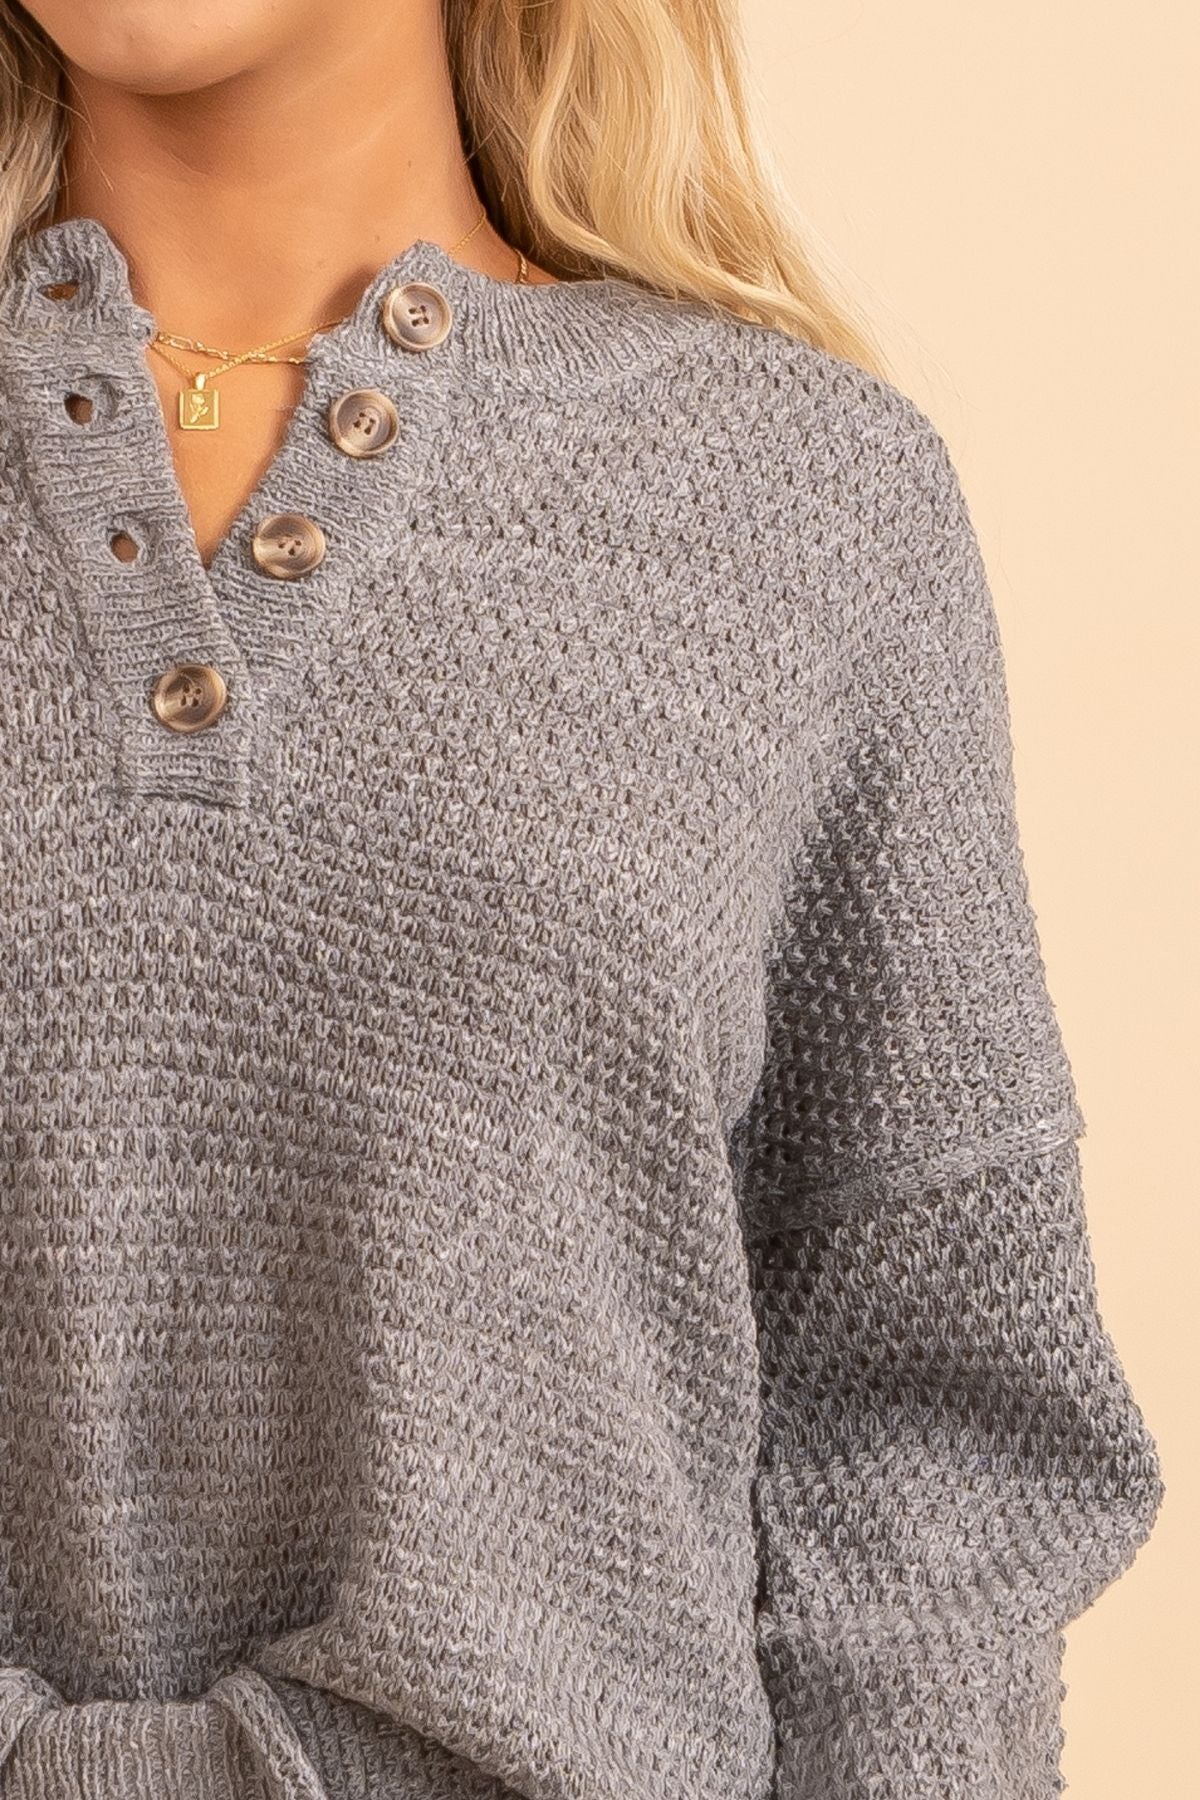 Gray knit set